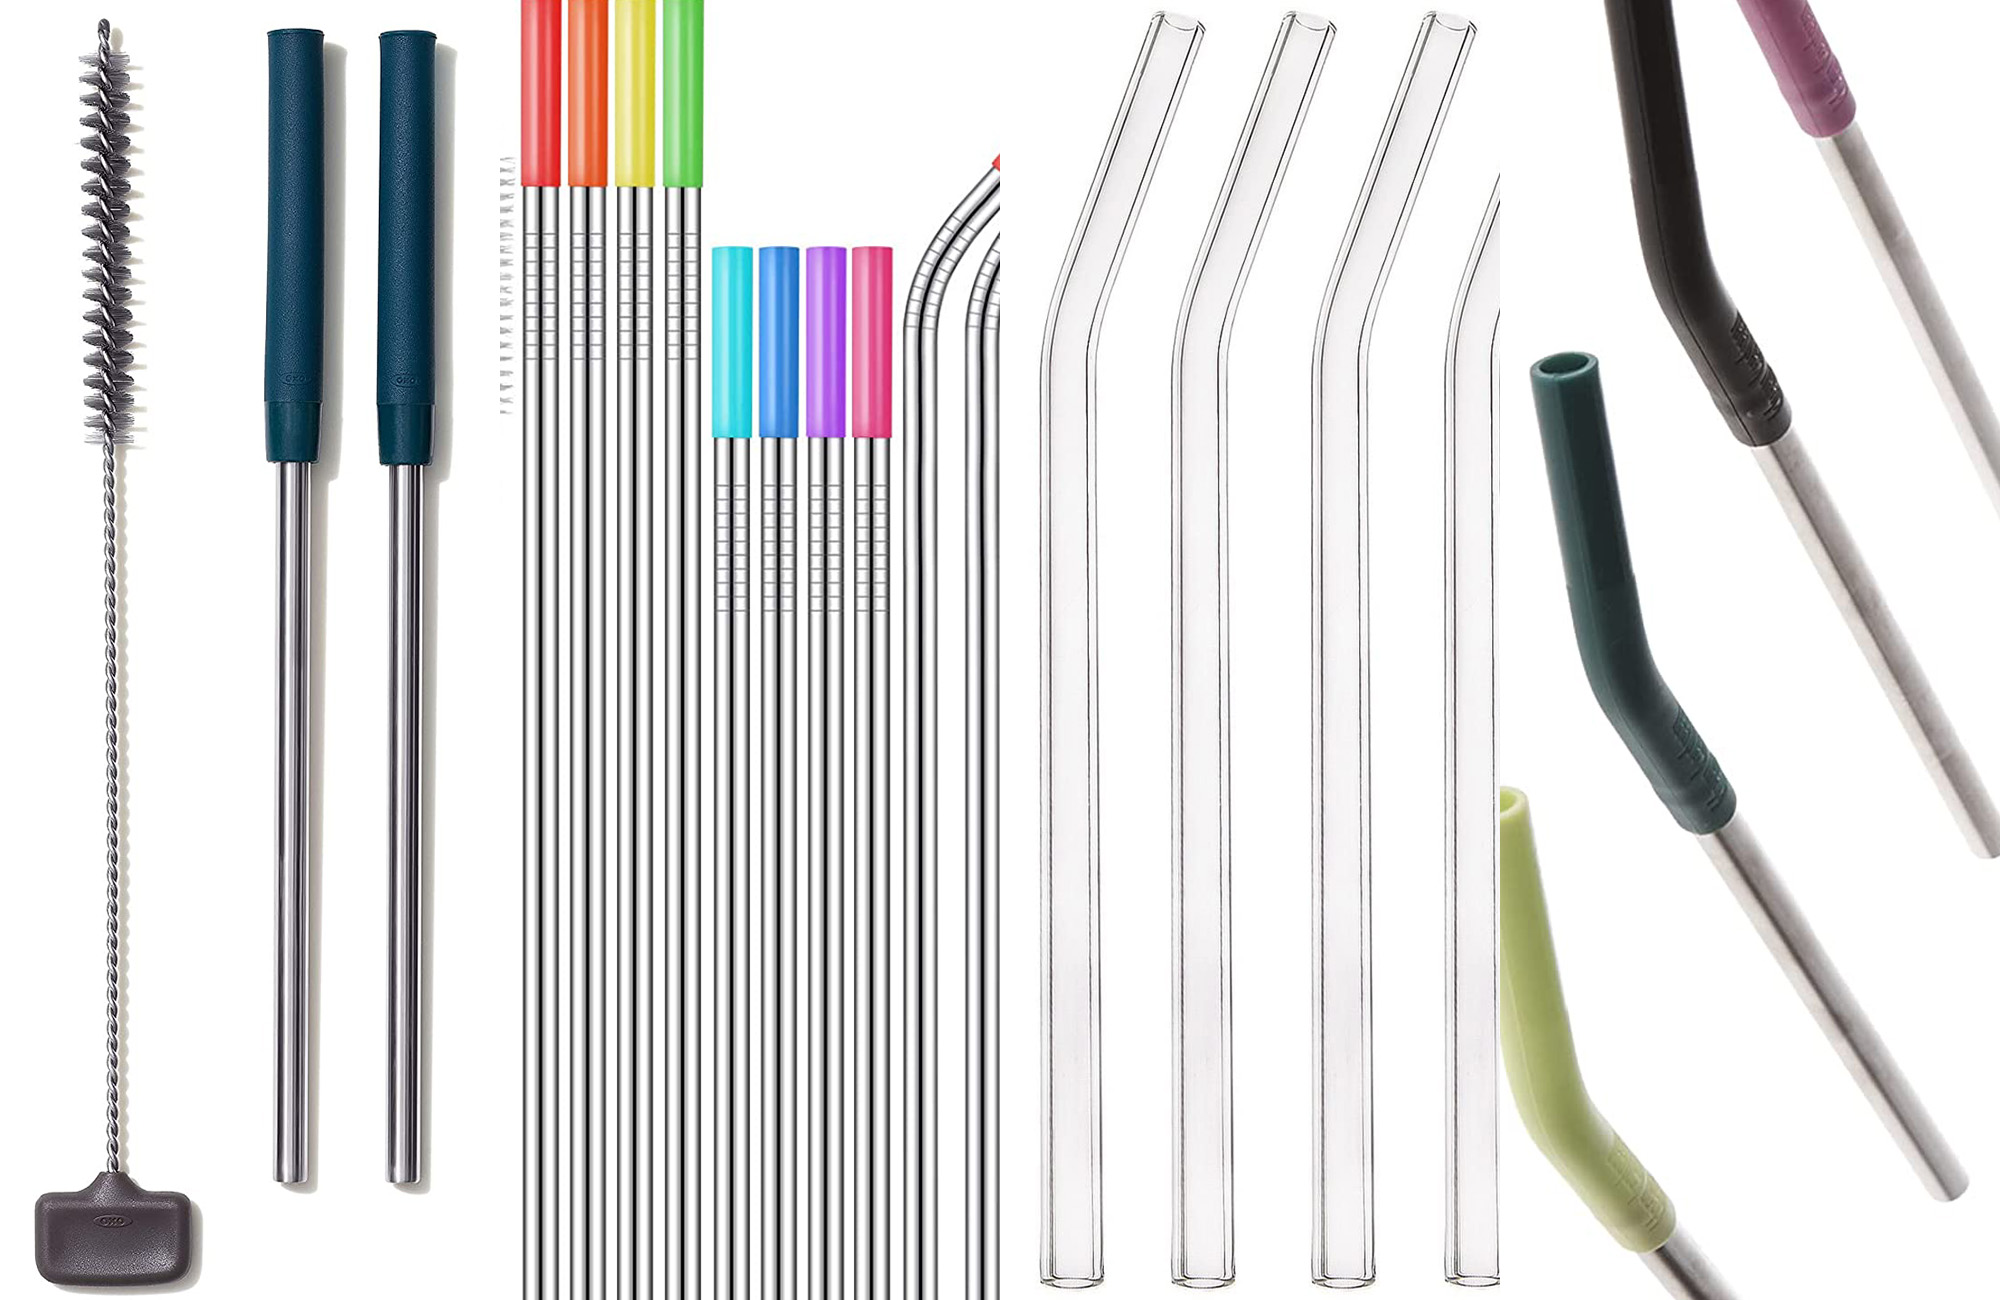 https://www.popsci.com/uploads/2022/02/31/best-reusable-straws-header.jpg?auto=webp&width=1440&height=936